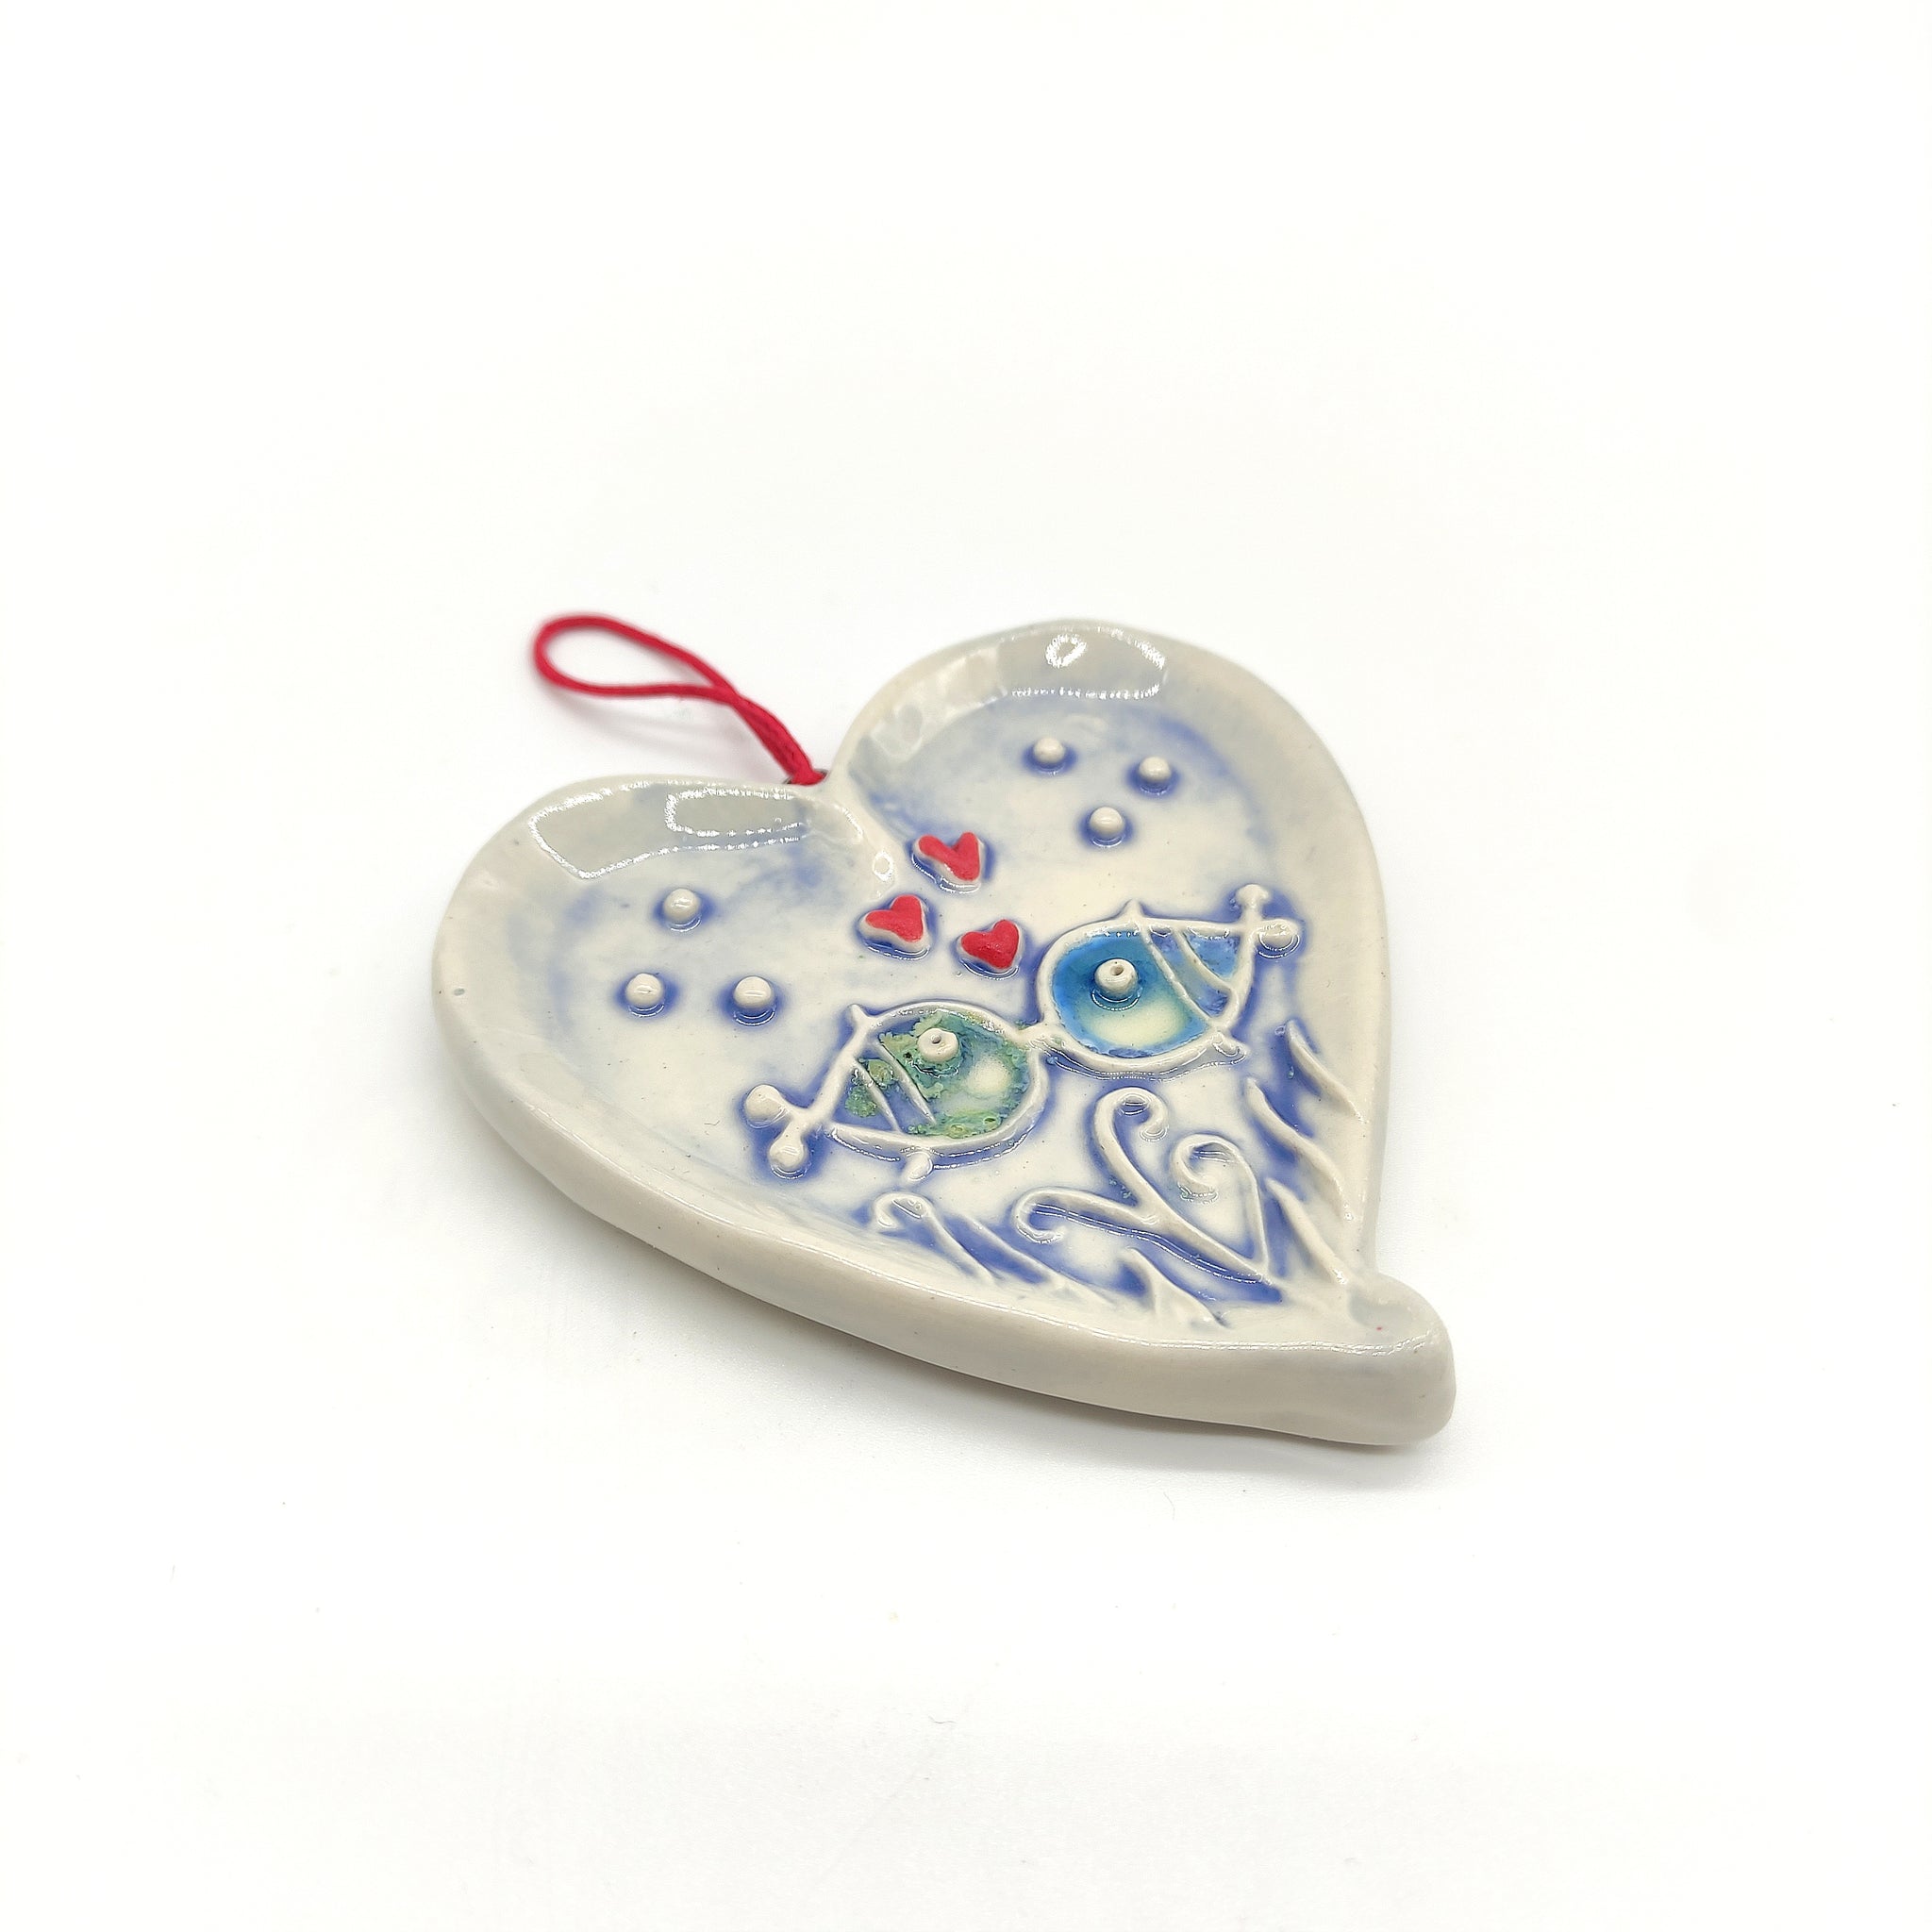 Irish Ceramic Love Heart Shaped Hanging Decoration - "Love Fish"-Nook & Cranny Gift Store-2019 National Gift Store Of The Year-Ireland-Gift Shop